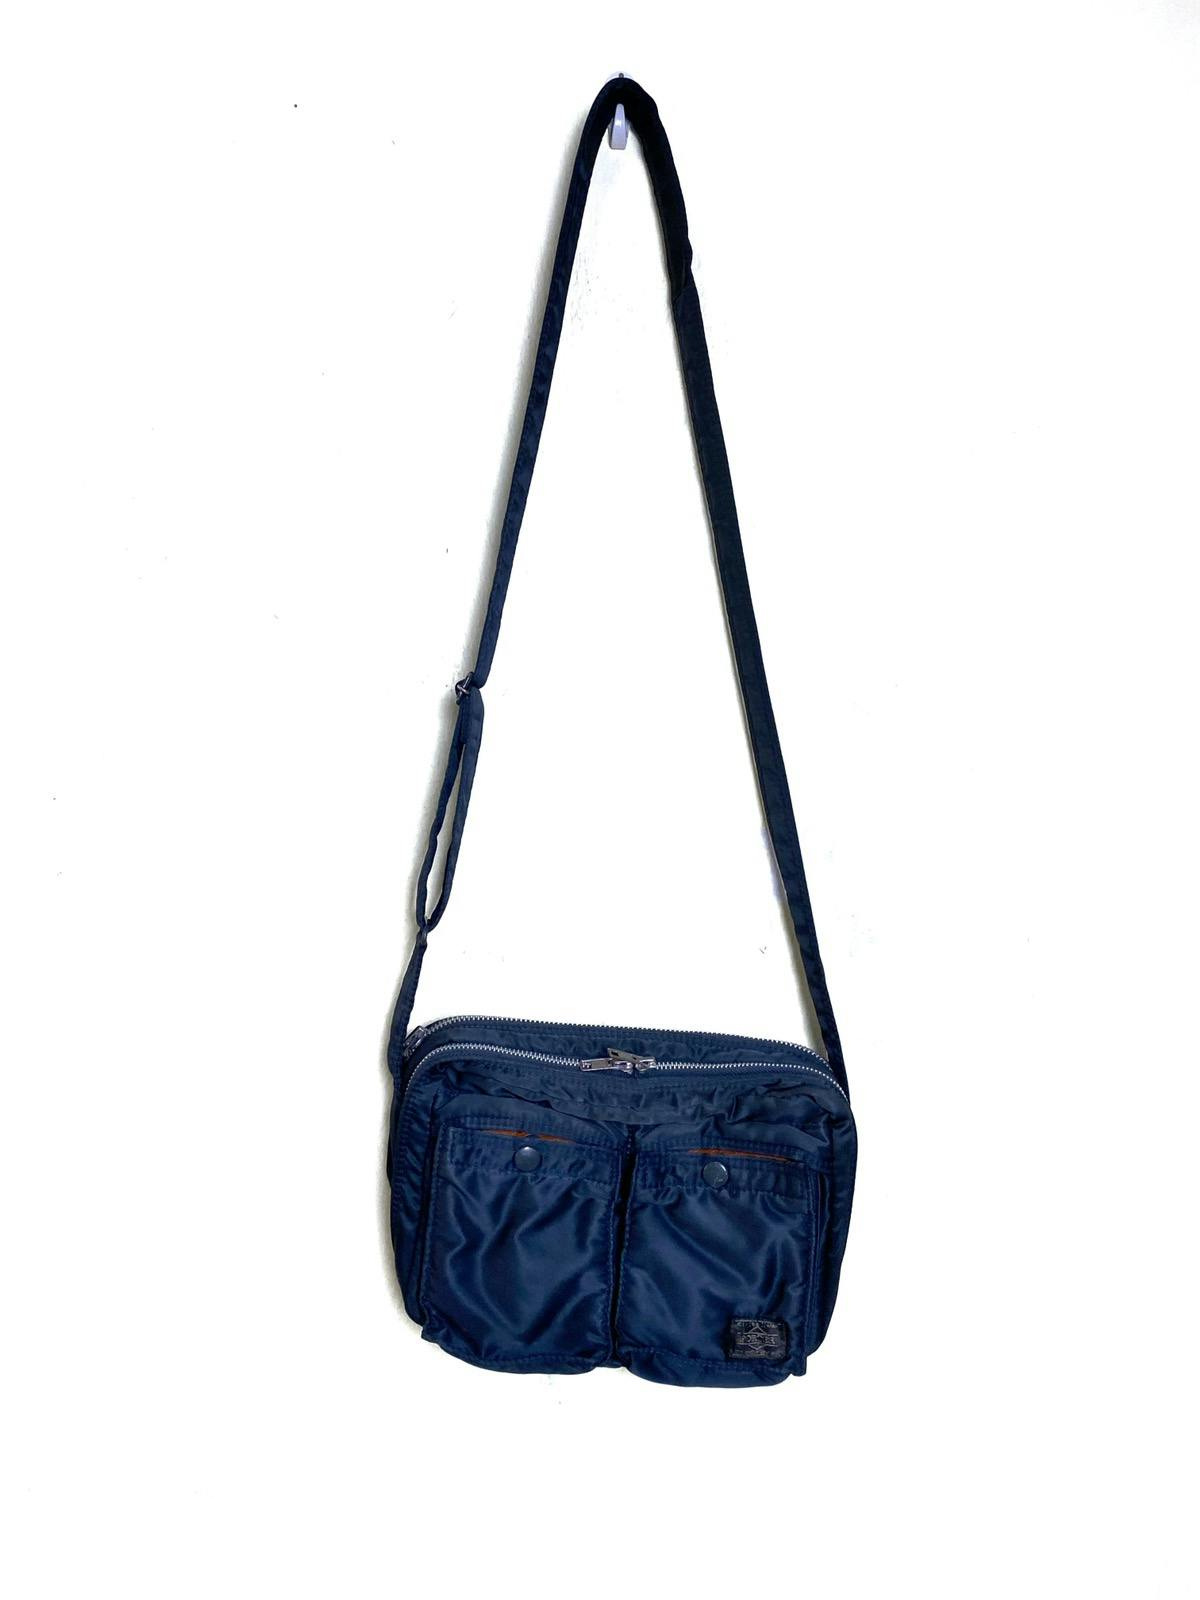 Porter Sling Bag Made in Japan - 2